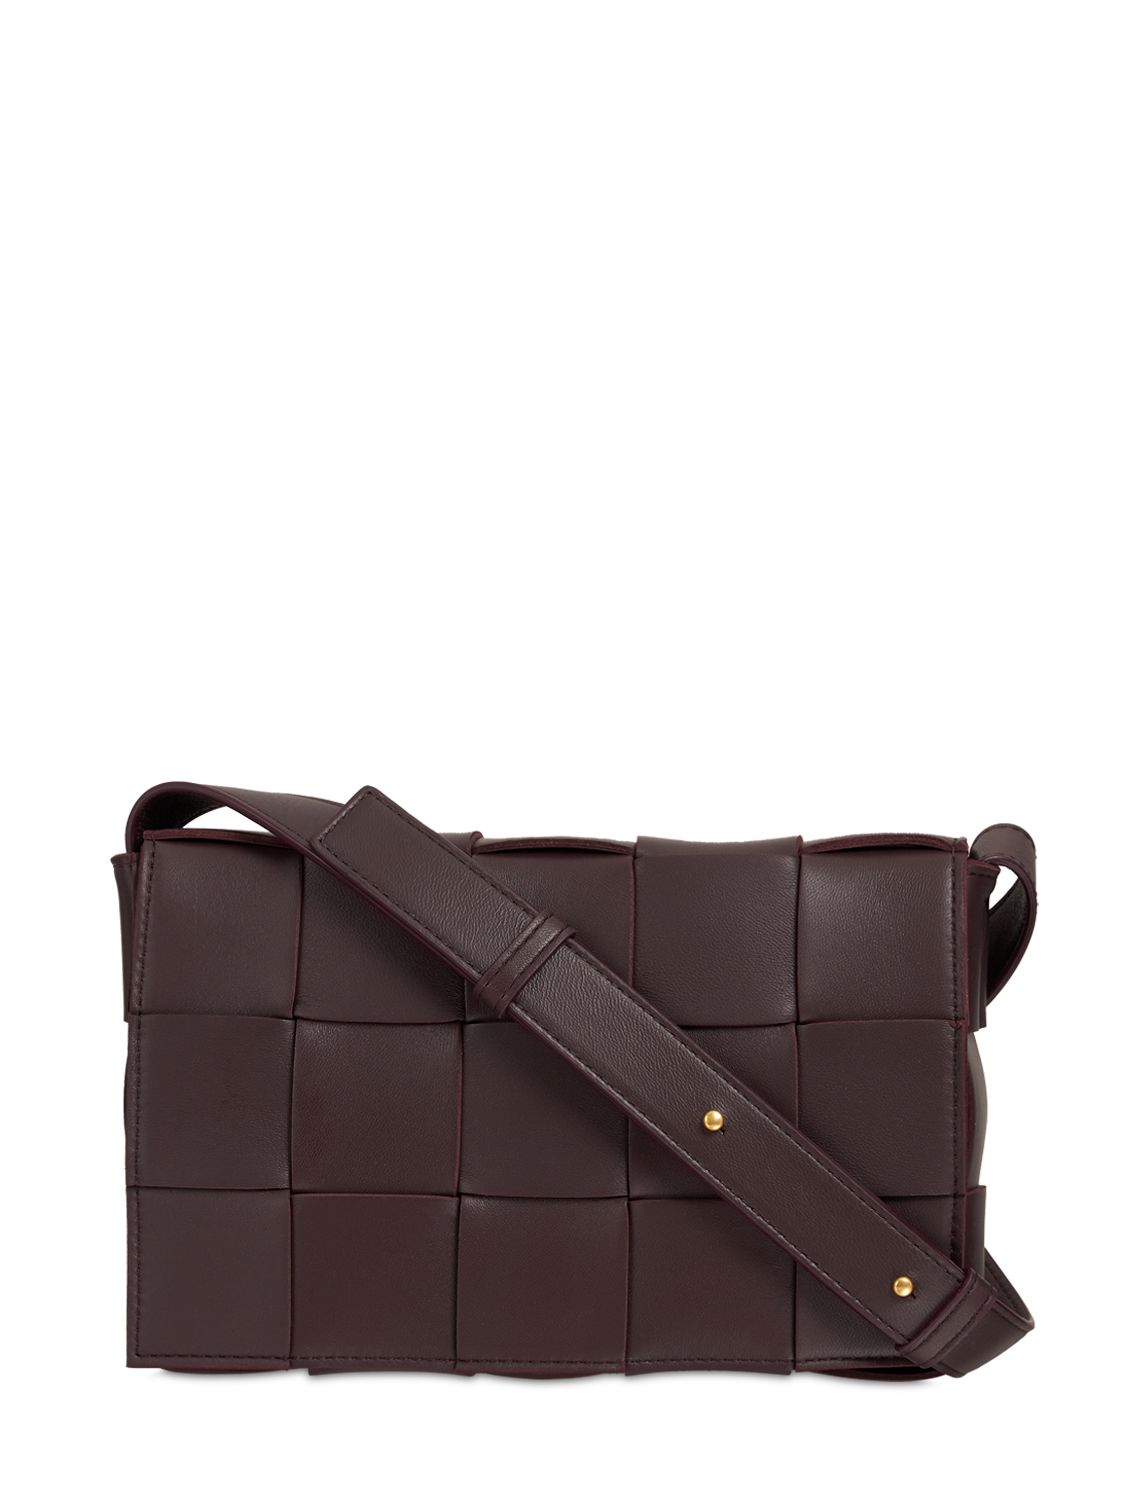 Medium Cassette Leather Crossbody Bag